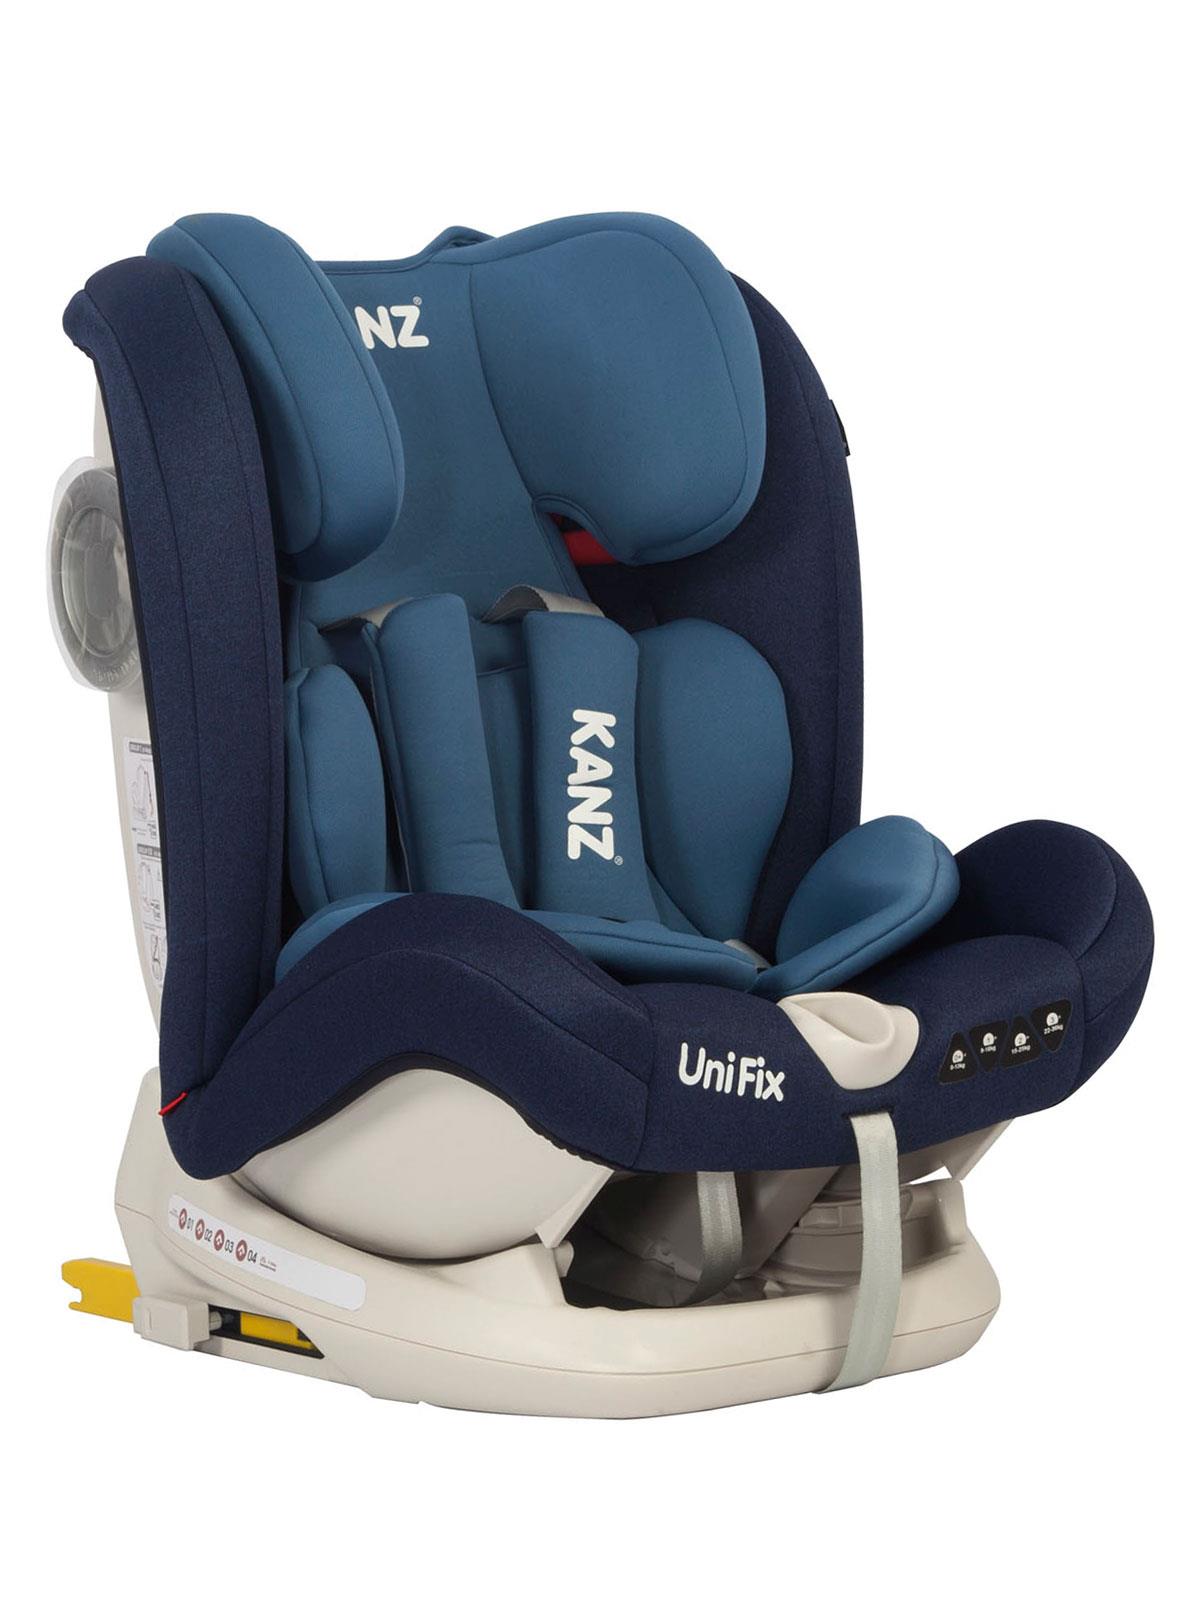 Kanz UniFix Car Seat Blue